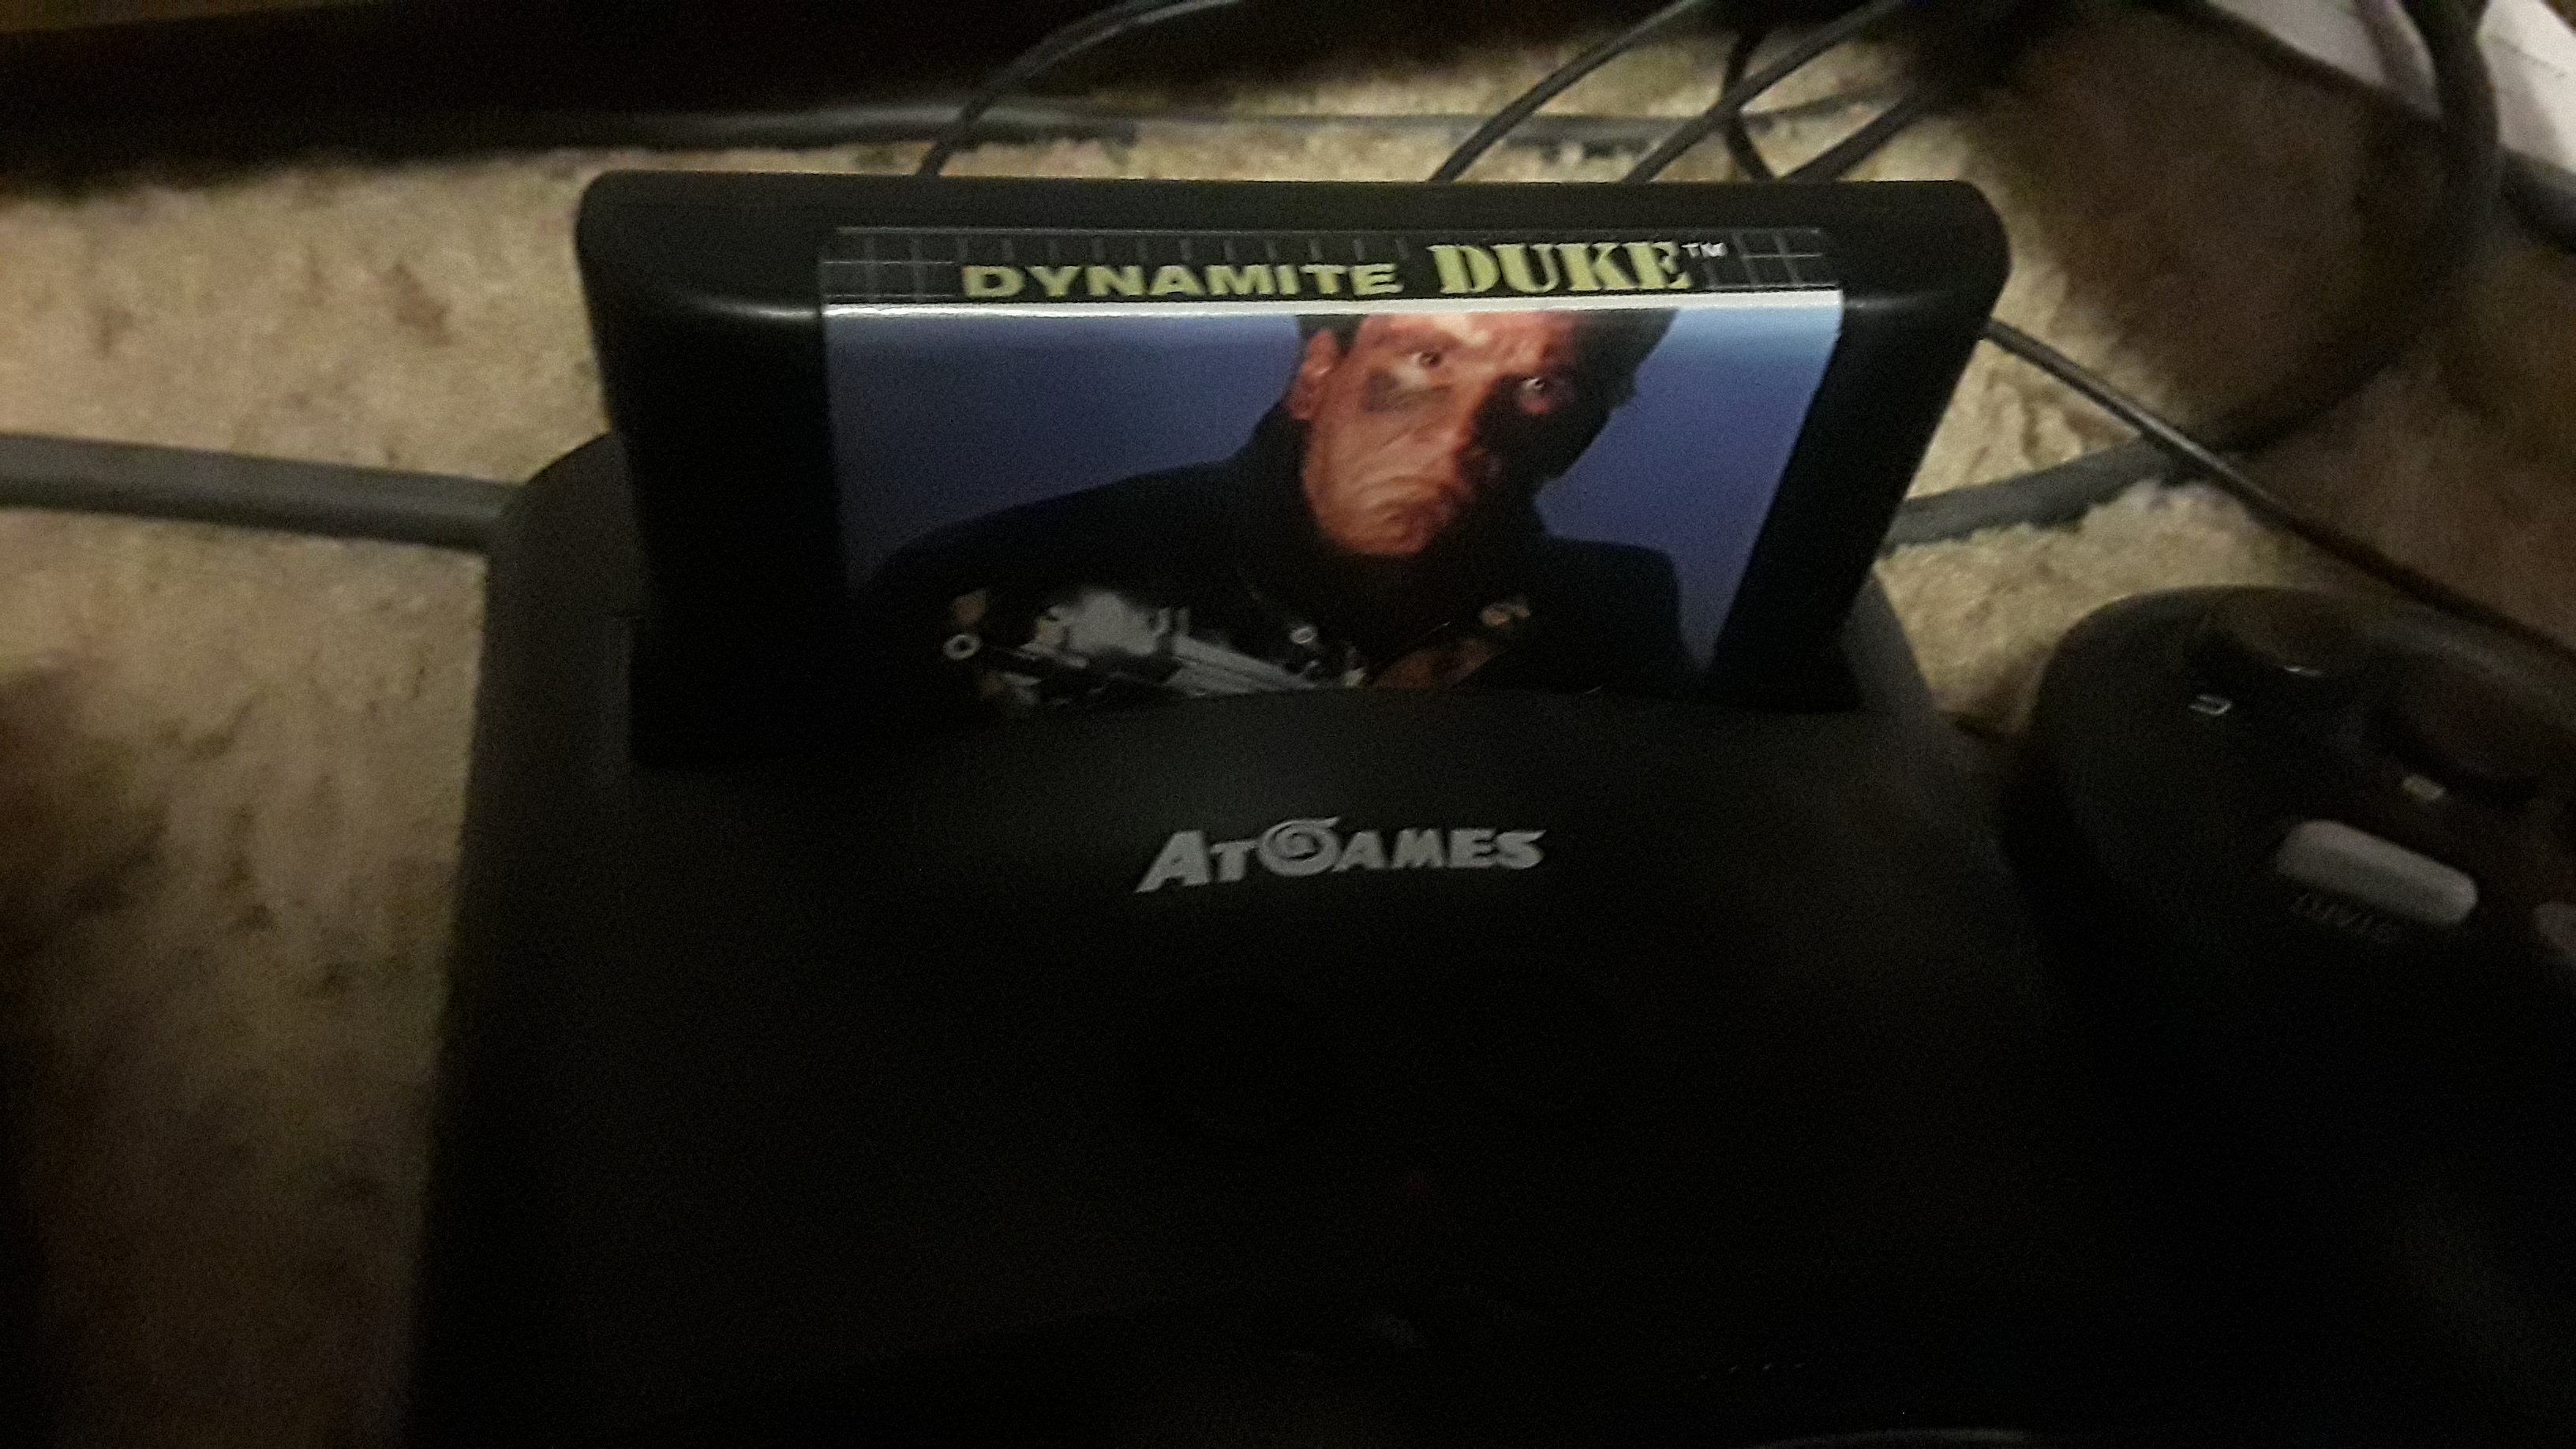 JML101582: Dynamite Duke (Sega Genesis / MegaDrive Emulated) 16,600 points on 2019-12-05 20:41:40